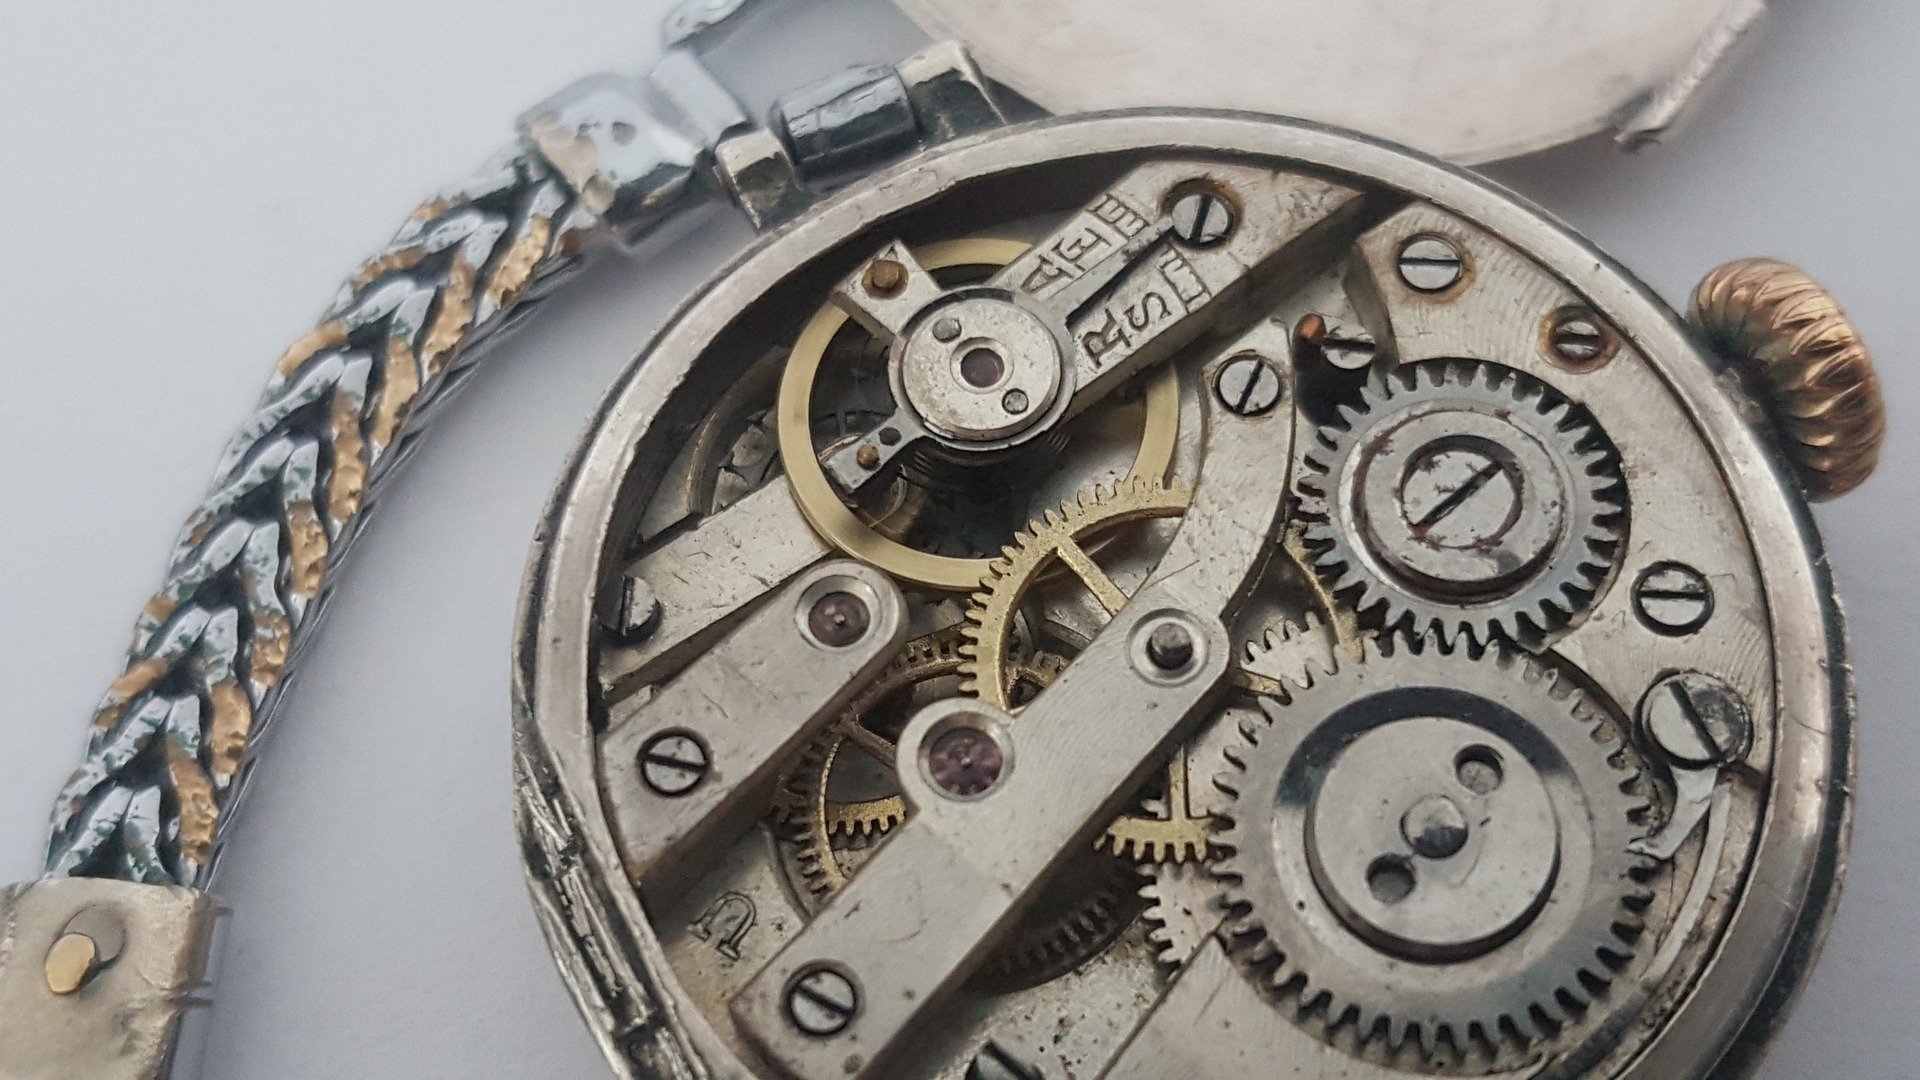 5 Mechanical Watches Under £1000